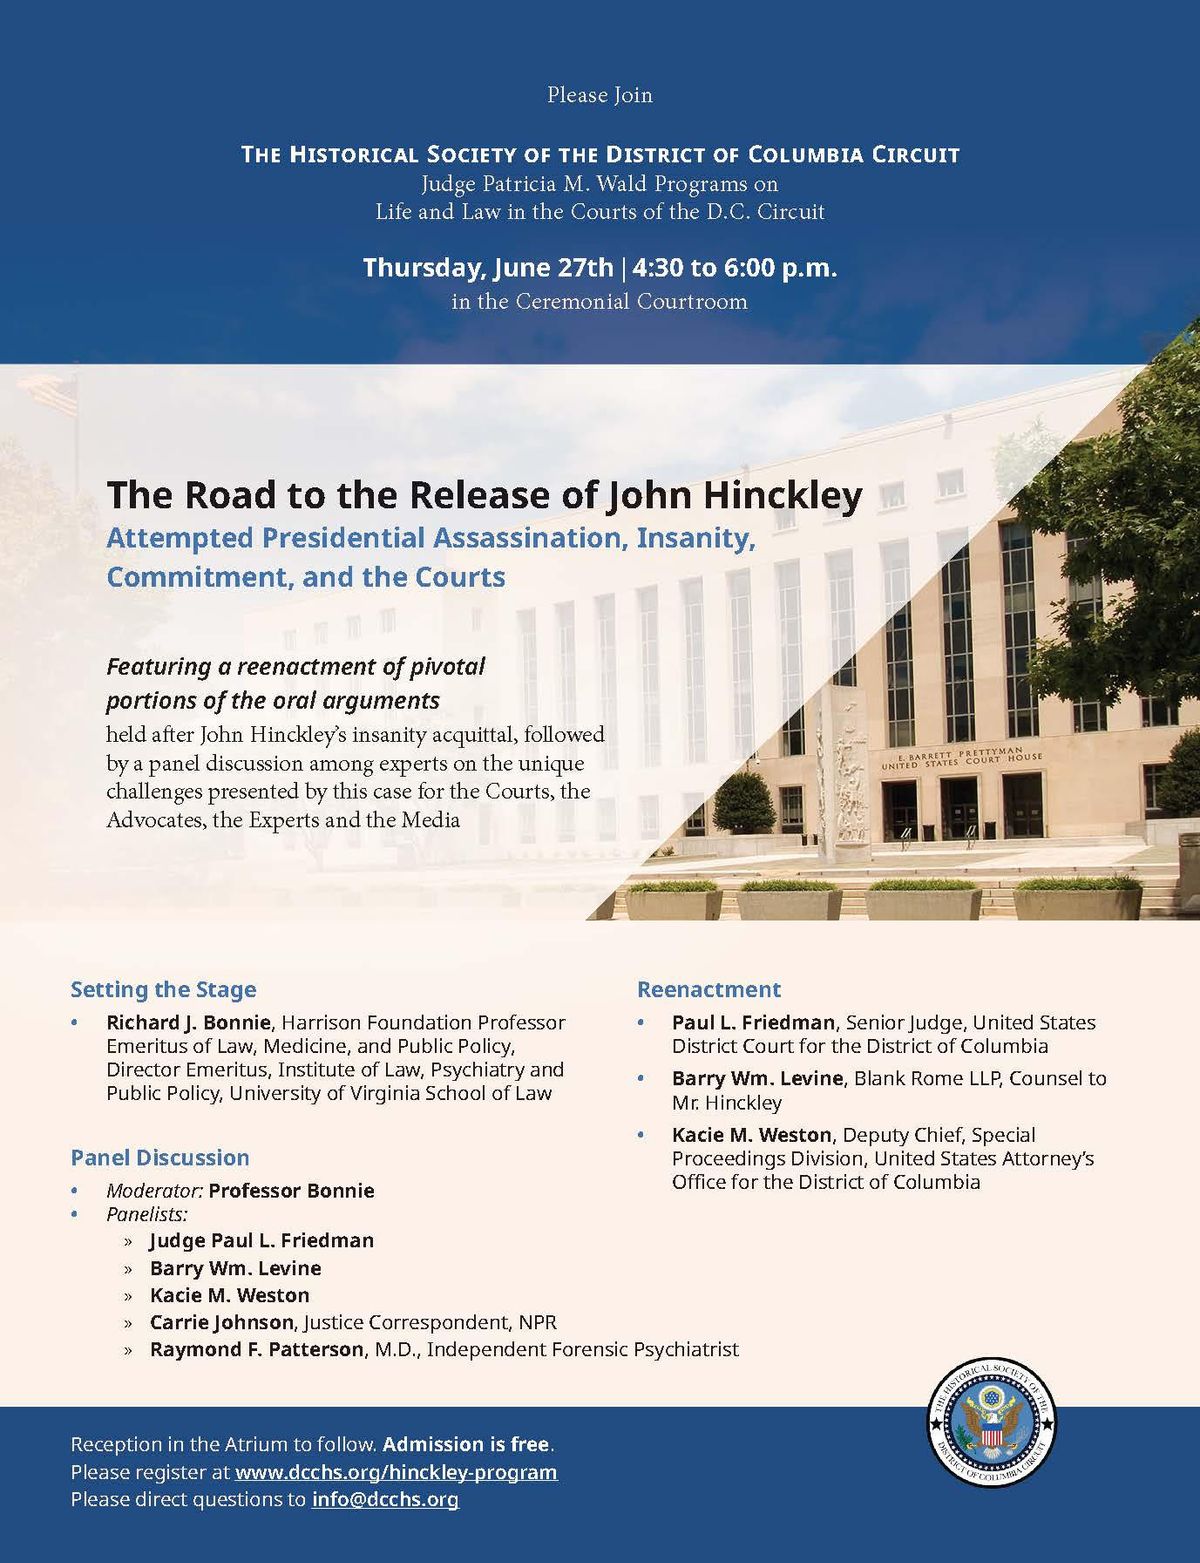 Hinckley Program Open for Registration